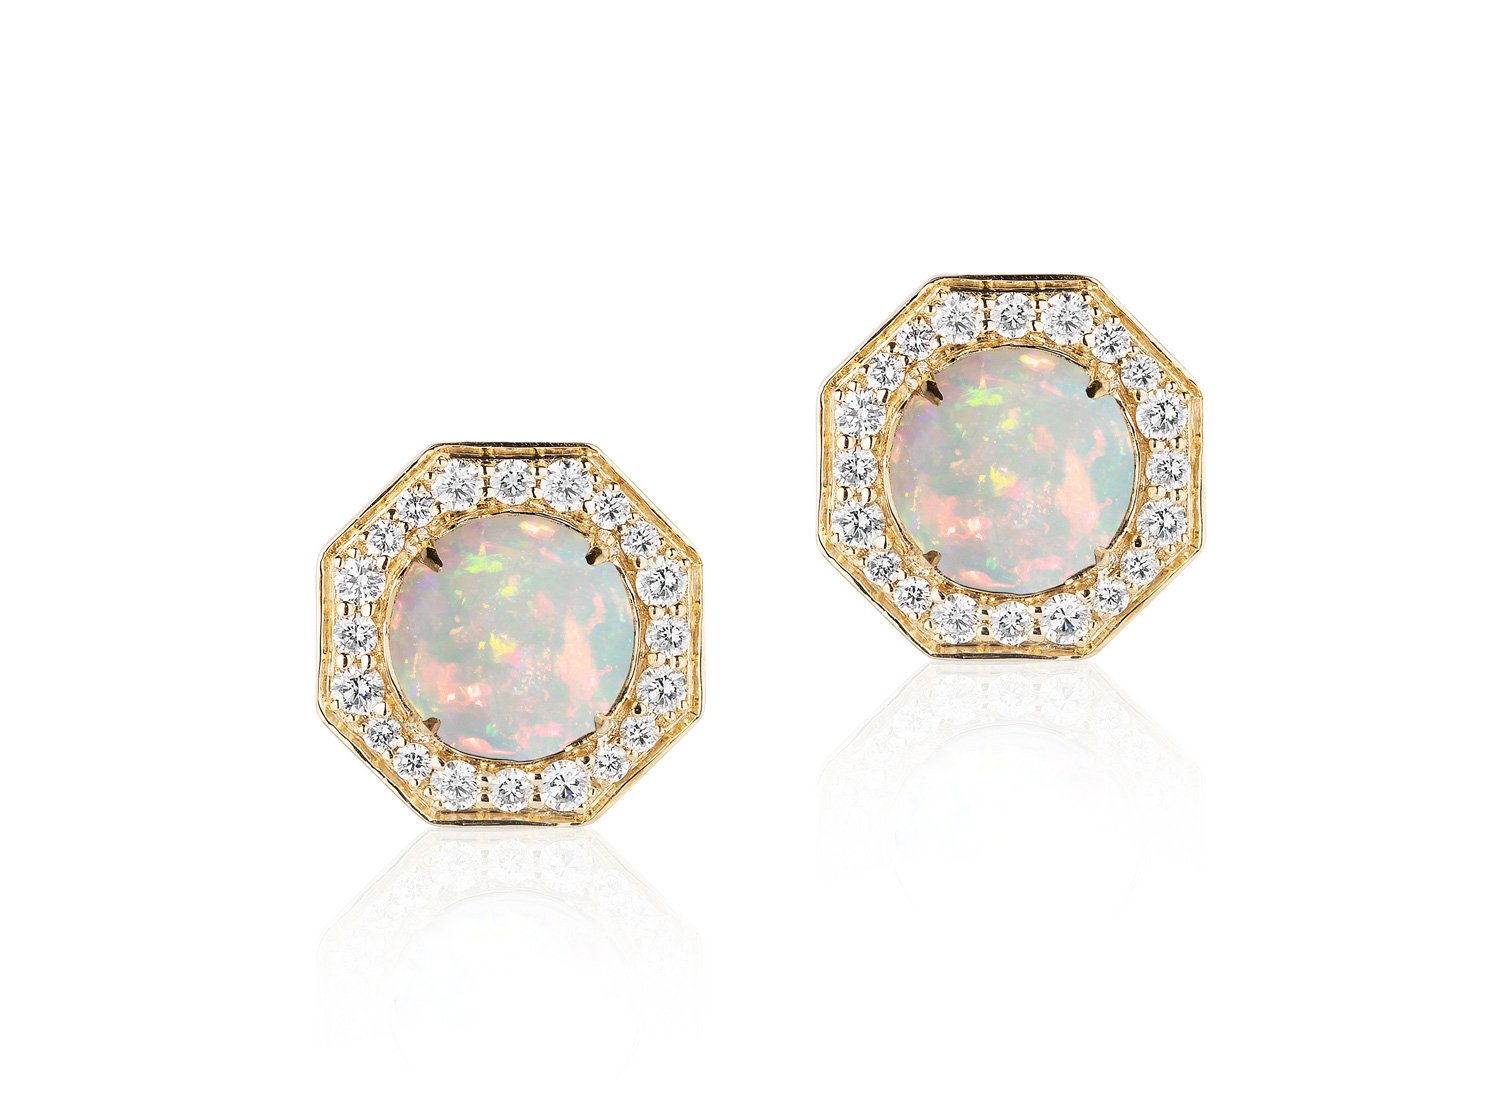 Goshwara "G-One" Opal Stud Earrings with Diamonds